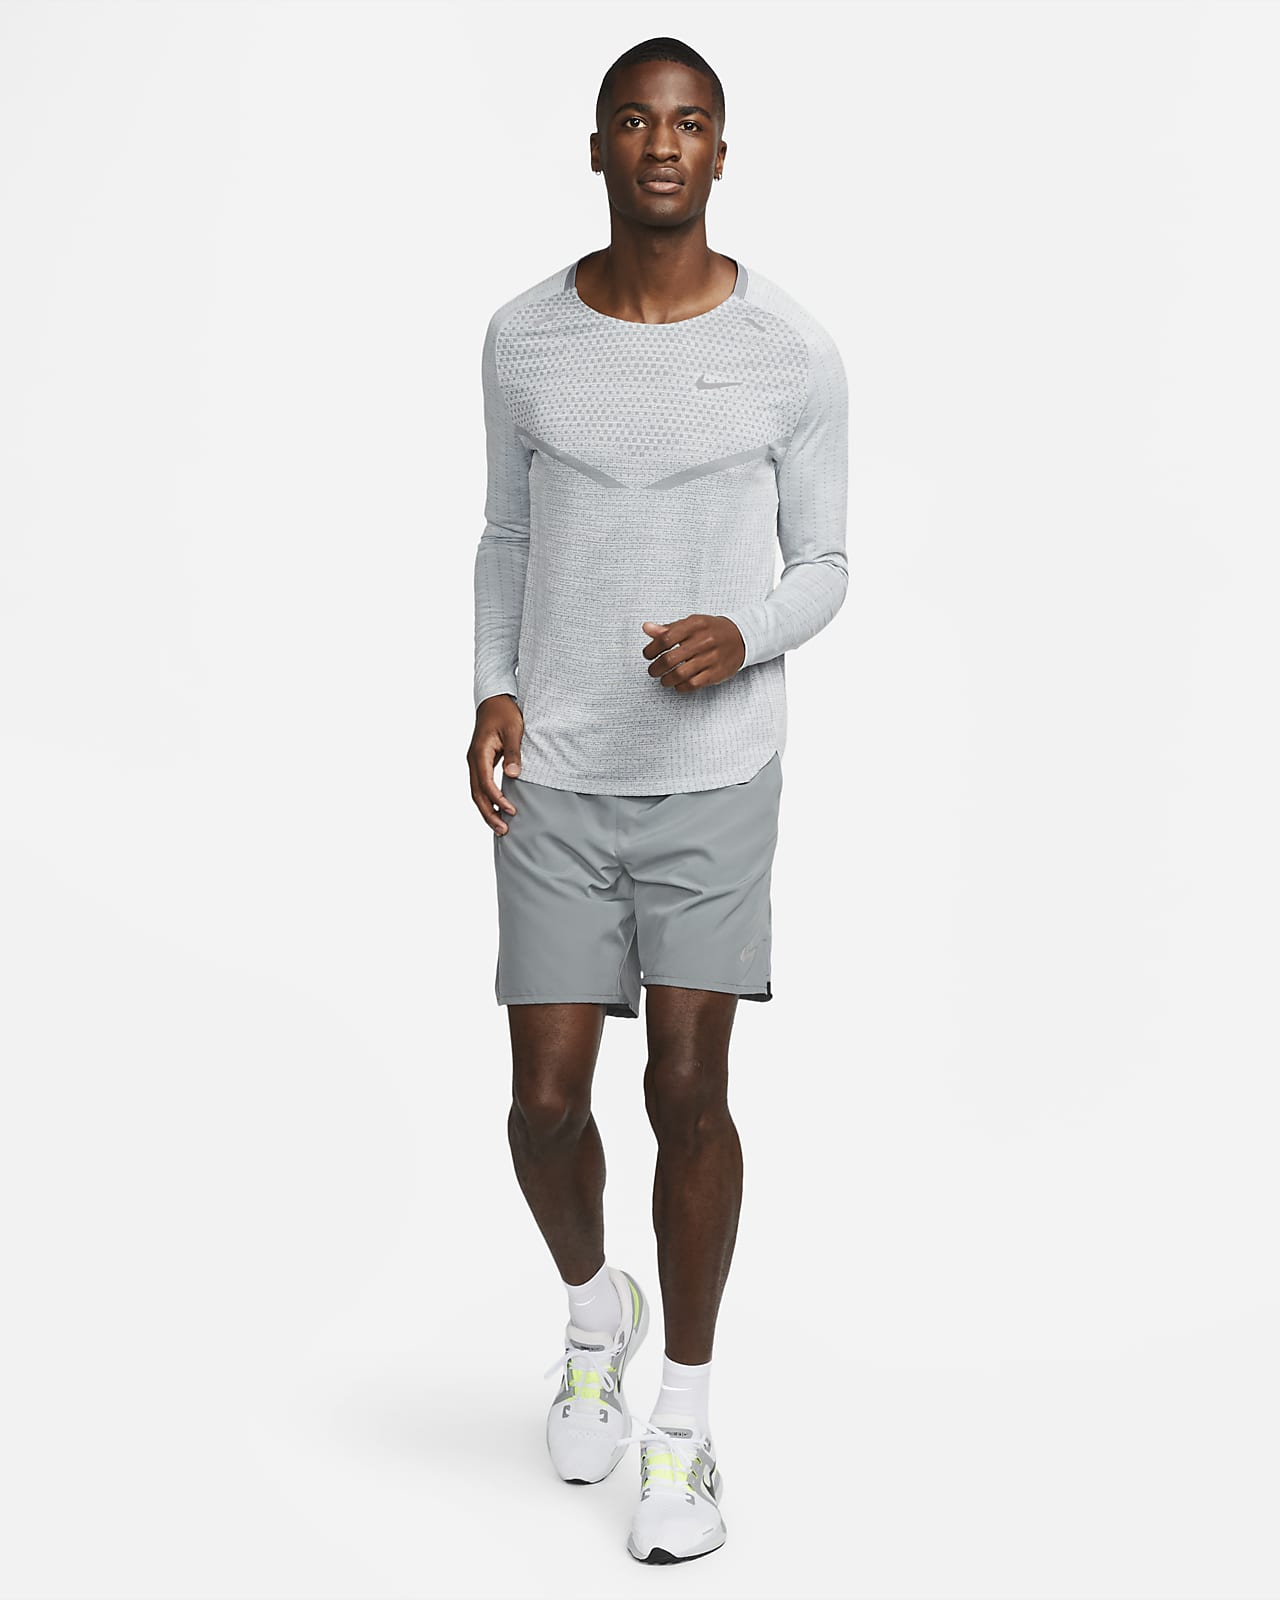 Nike Men's Challenger 2 7 Inch 2 in 1 Shorts